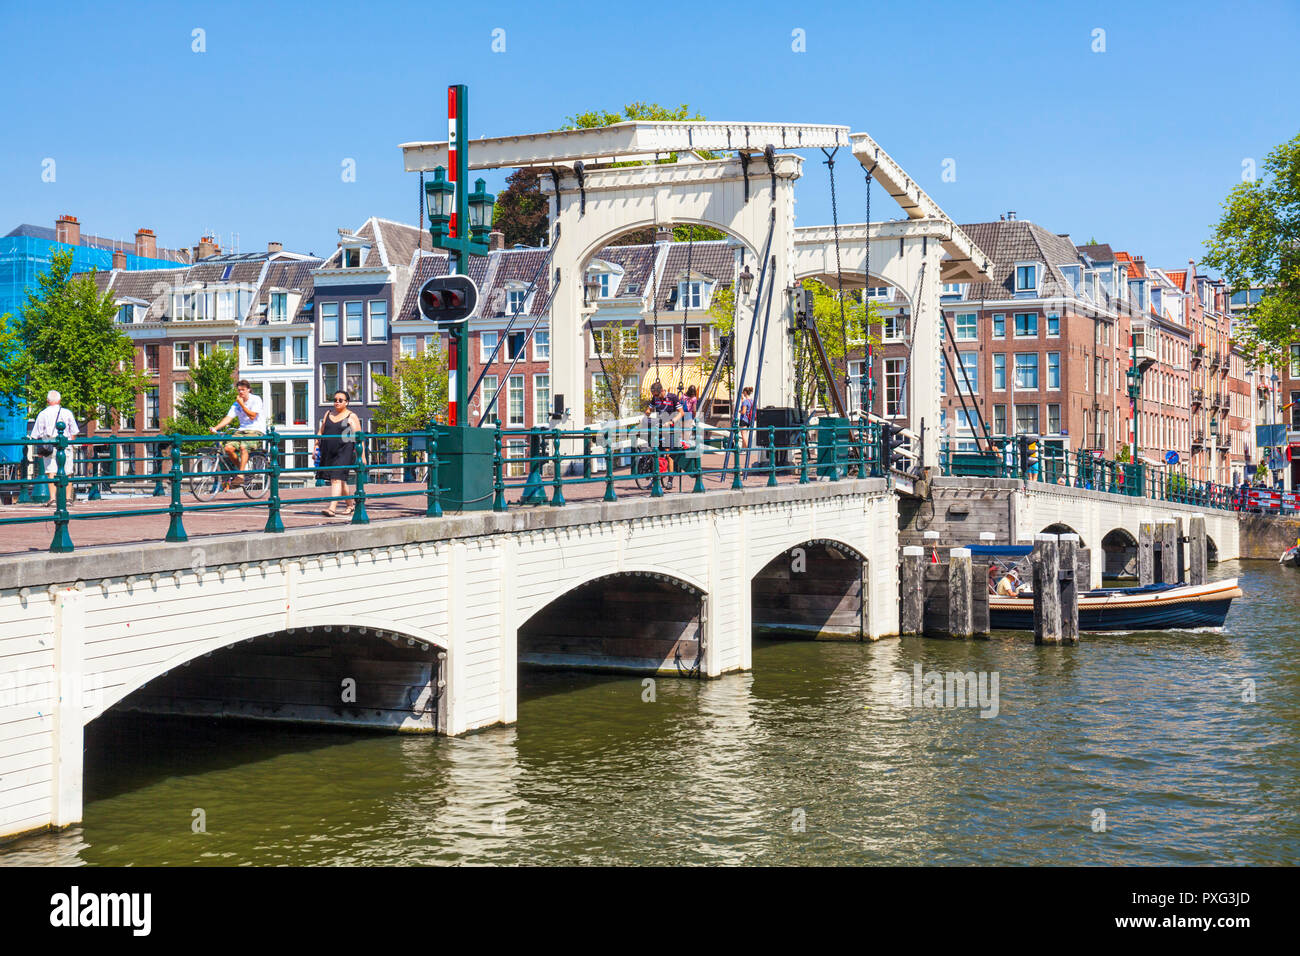 Amsterdam Magere brug Amsterdam Skinny bridge Amsterdam double drawbridge spanning the river Amstel Amsterdam Netherlands Holland EU Europe Stock Photo